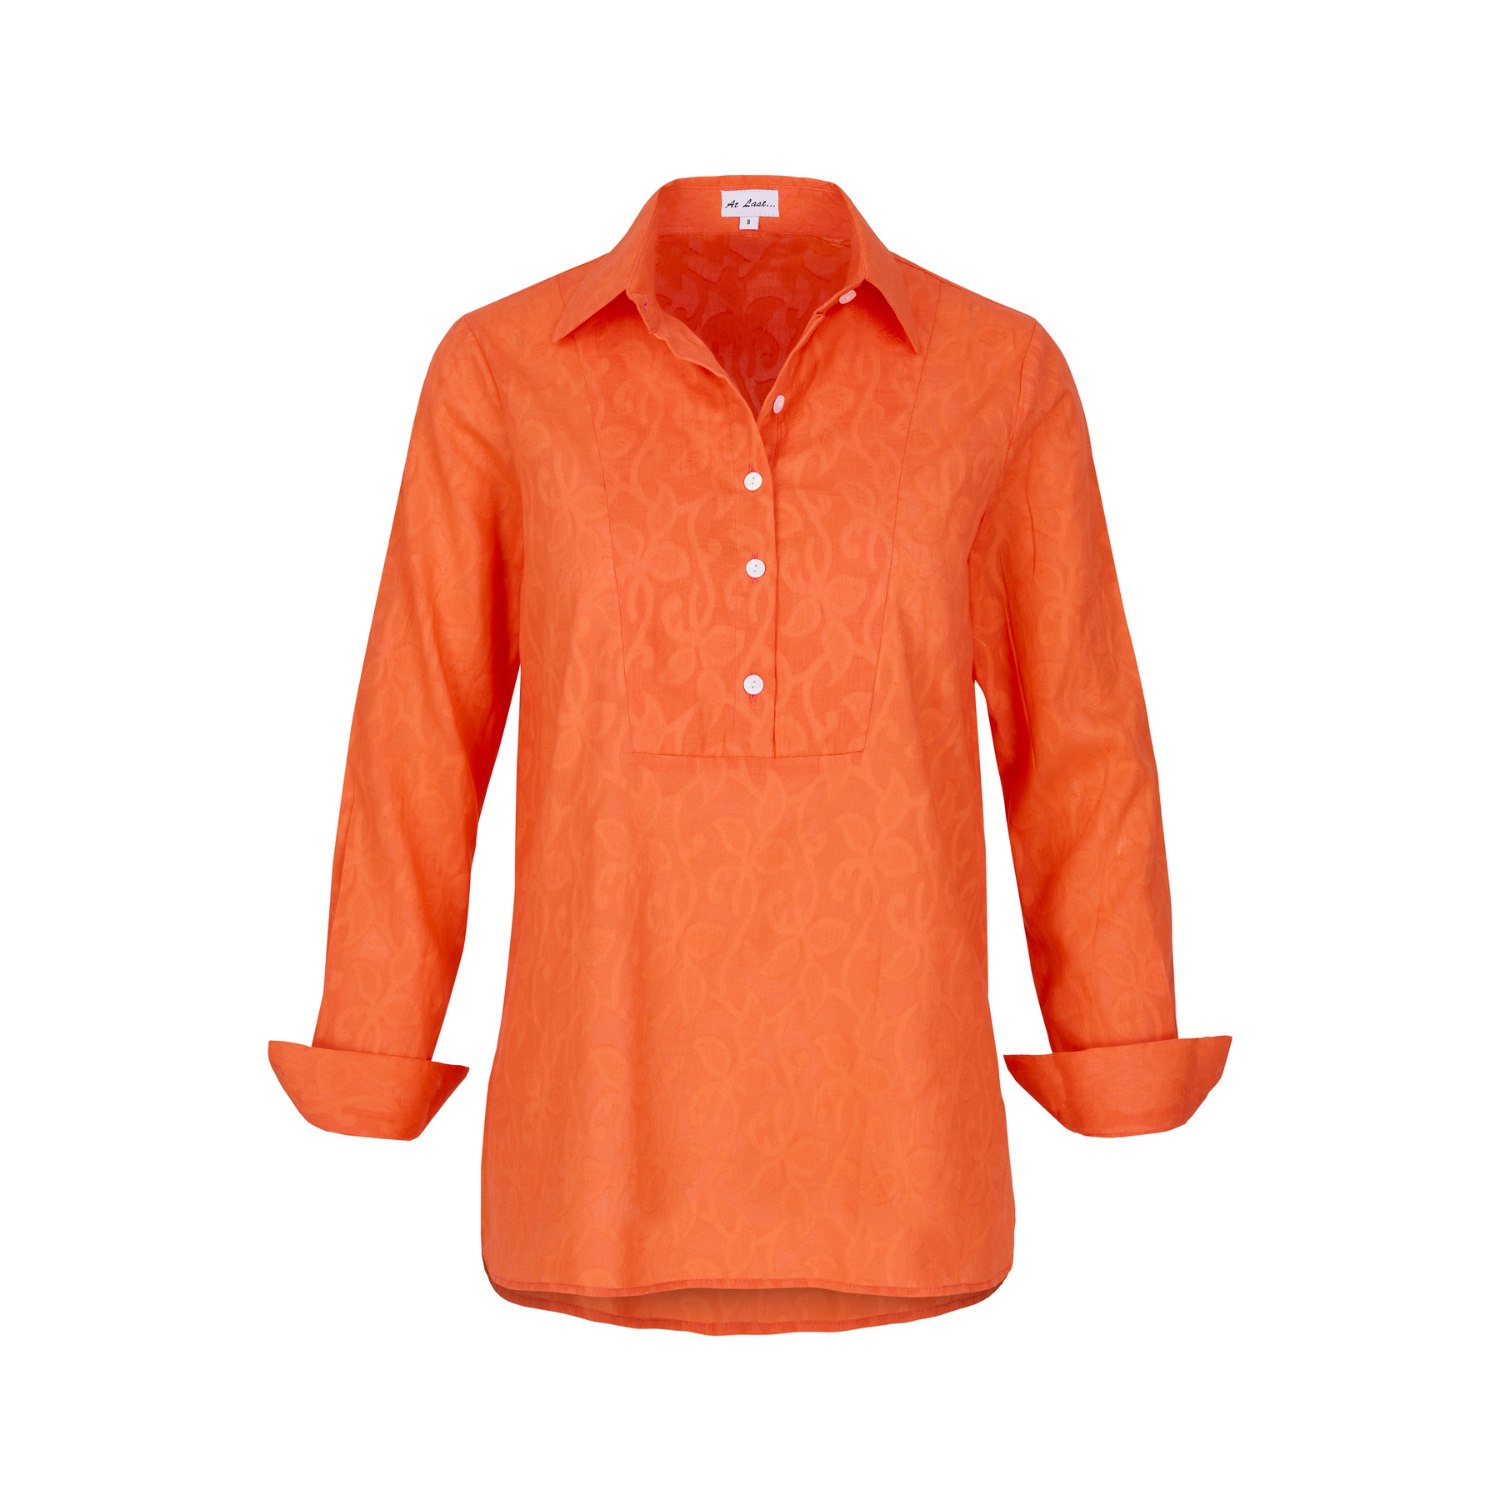 At Last... Women's Yellow / Orange Cotton Mayfair Shirt In Hand Woven Hot Orange